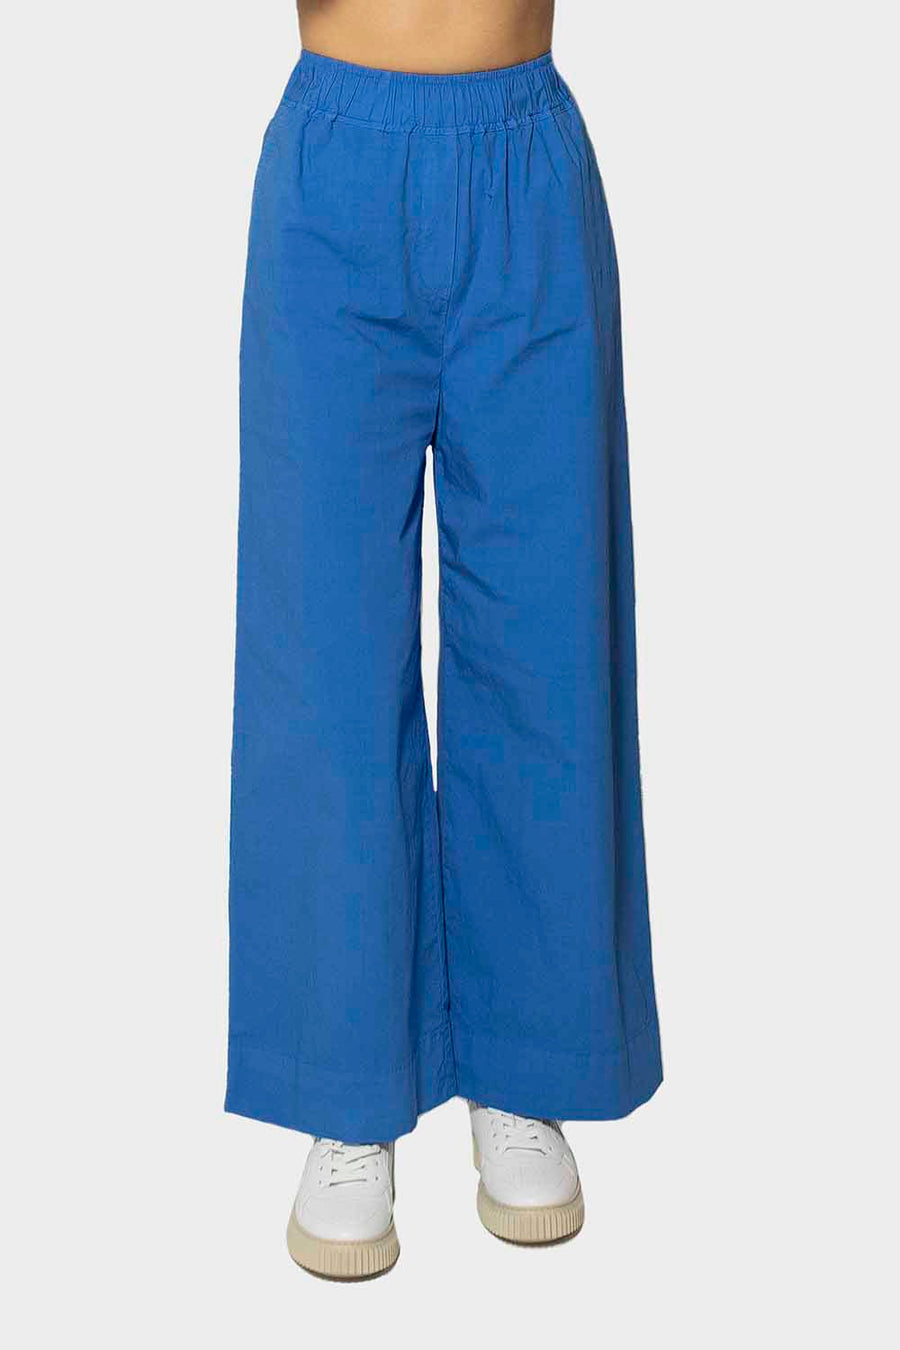 Pantalone True Nyc in cotone blu baloon